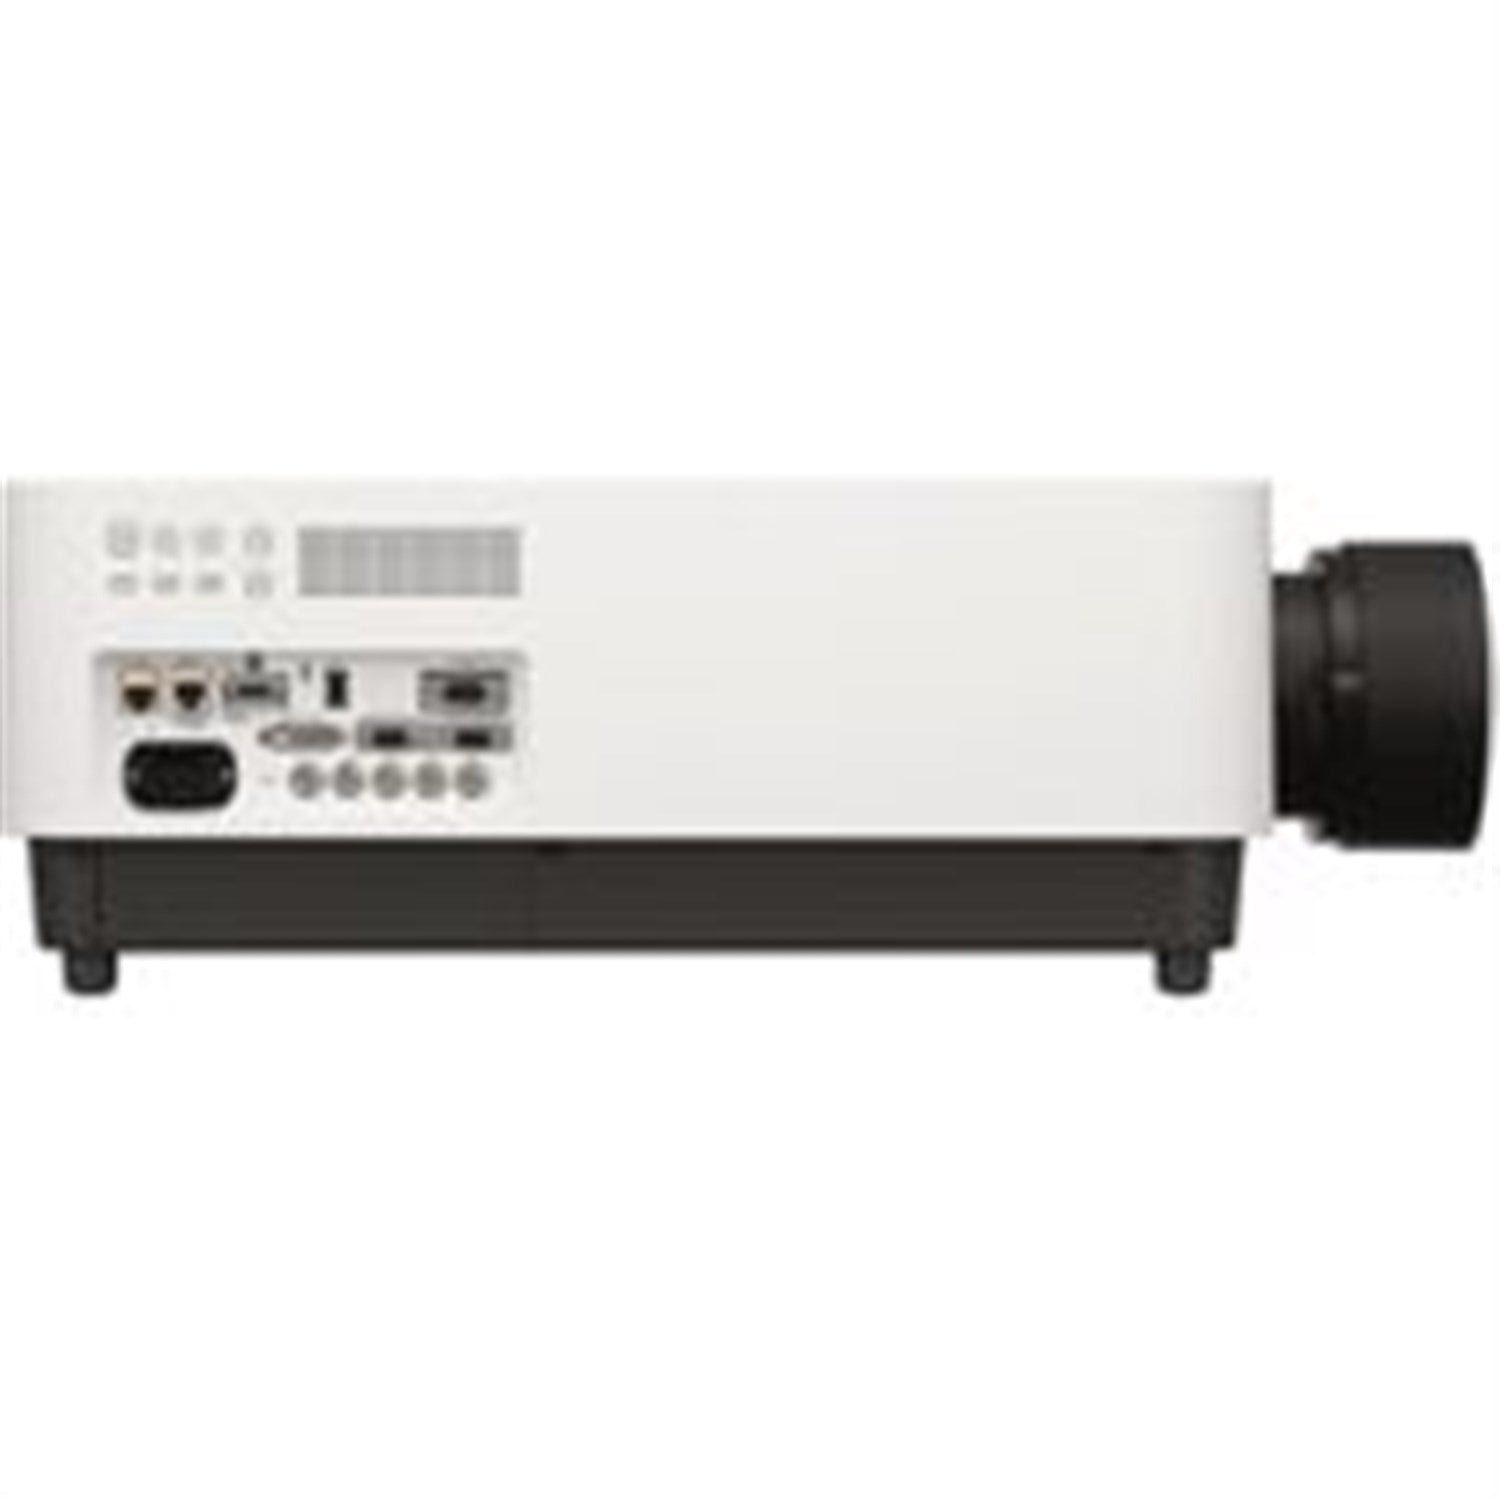 SONY - VPL-FHZ91L WUXGA 9000 lm Laser 3LCD Projector - White